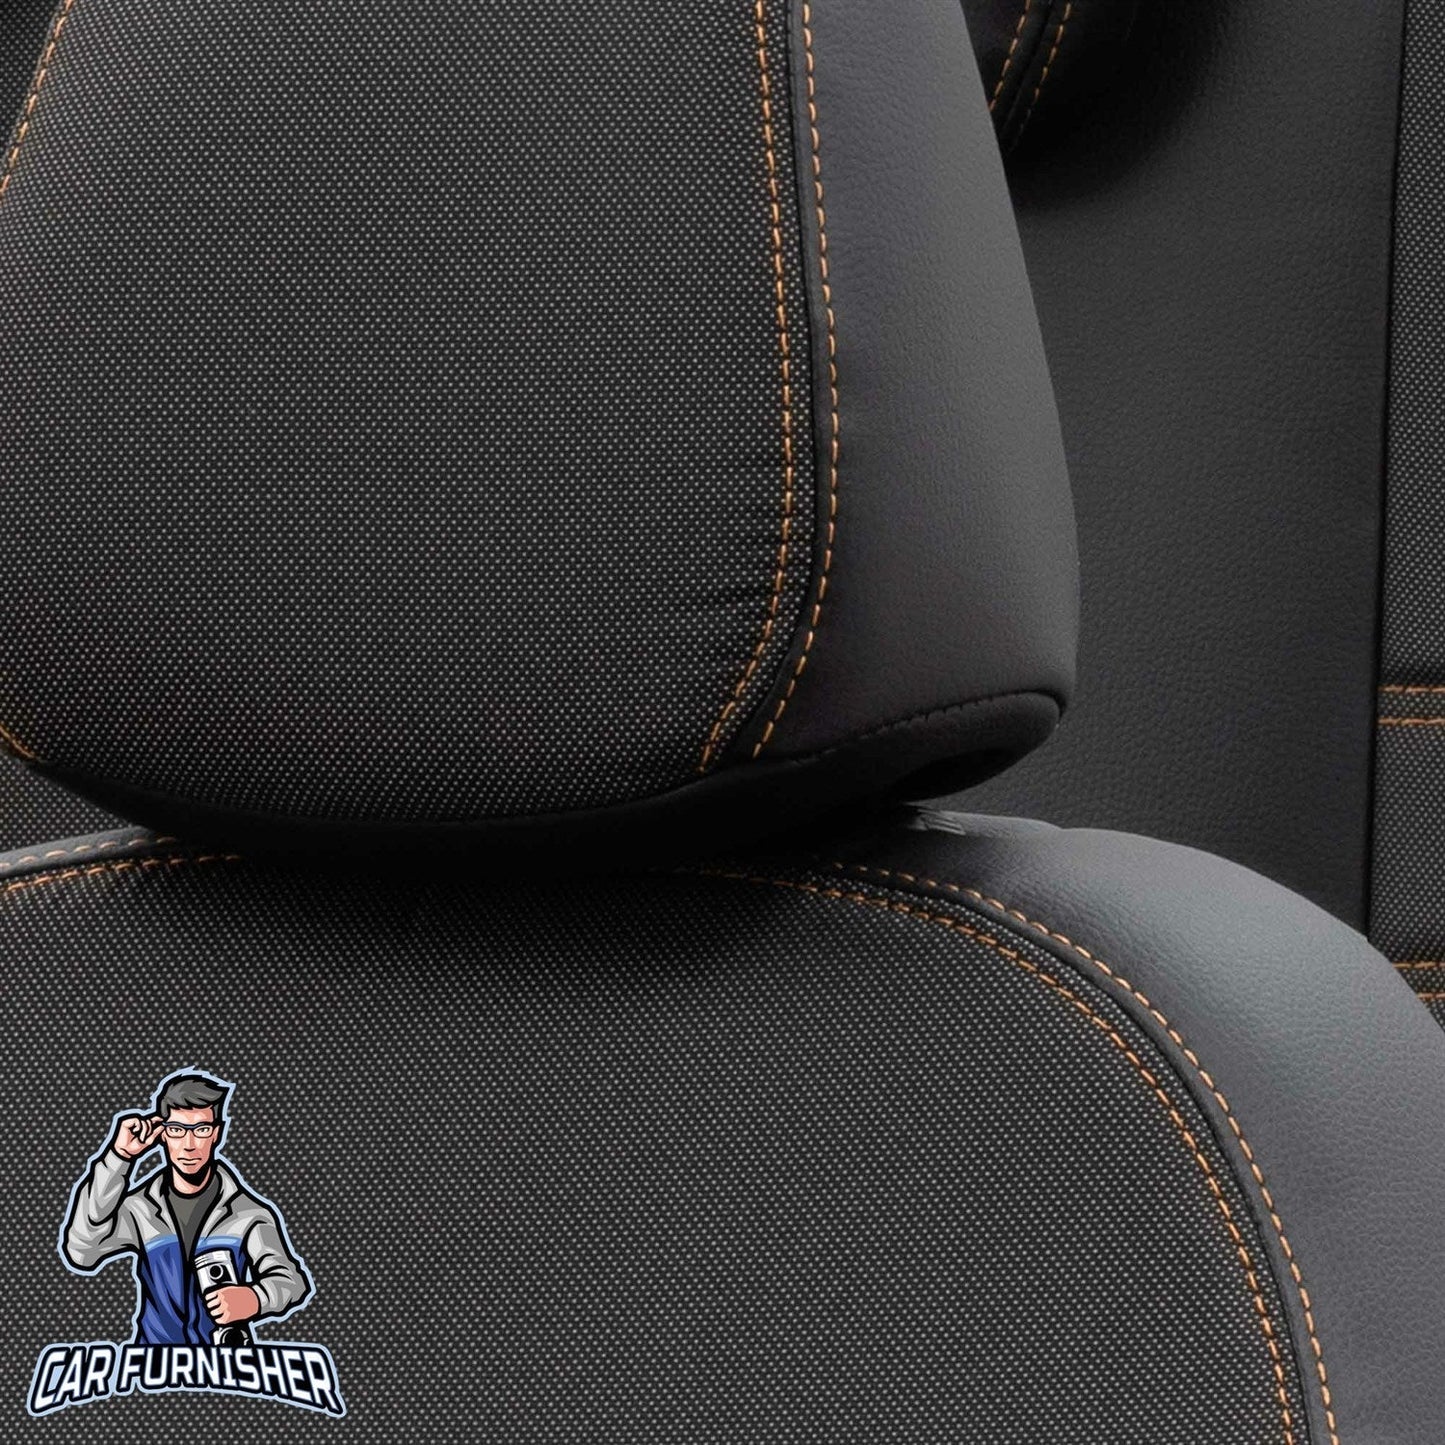 Bmw 5 Series Seat Cover Paris Leather & Jacquard Design Dark Beige Leather & Jacquard Fabric